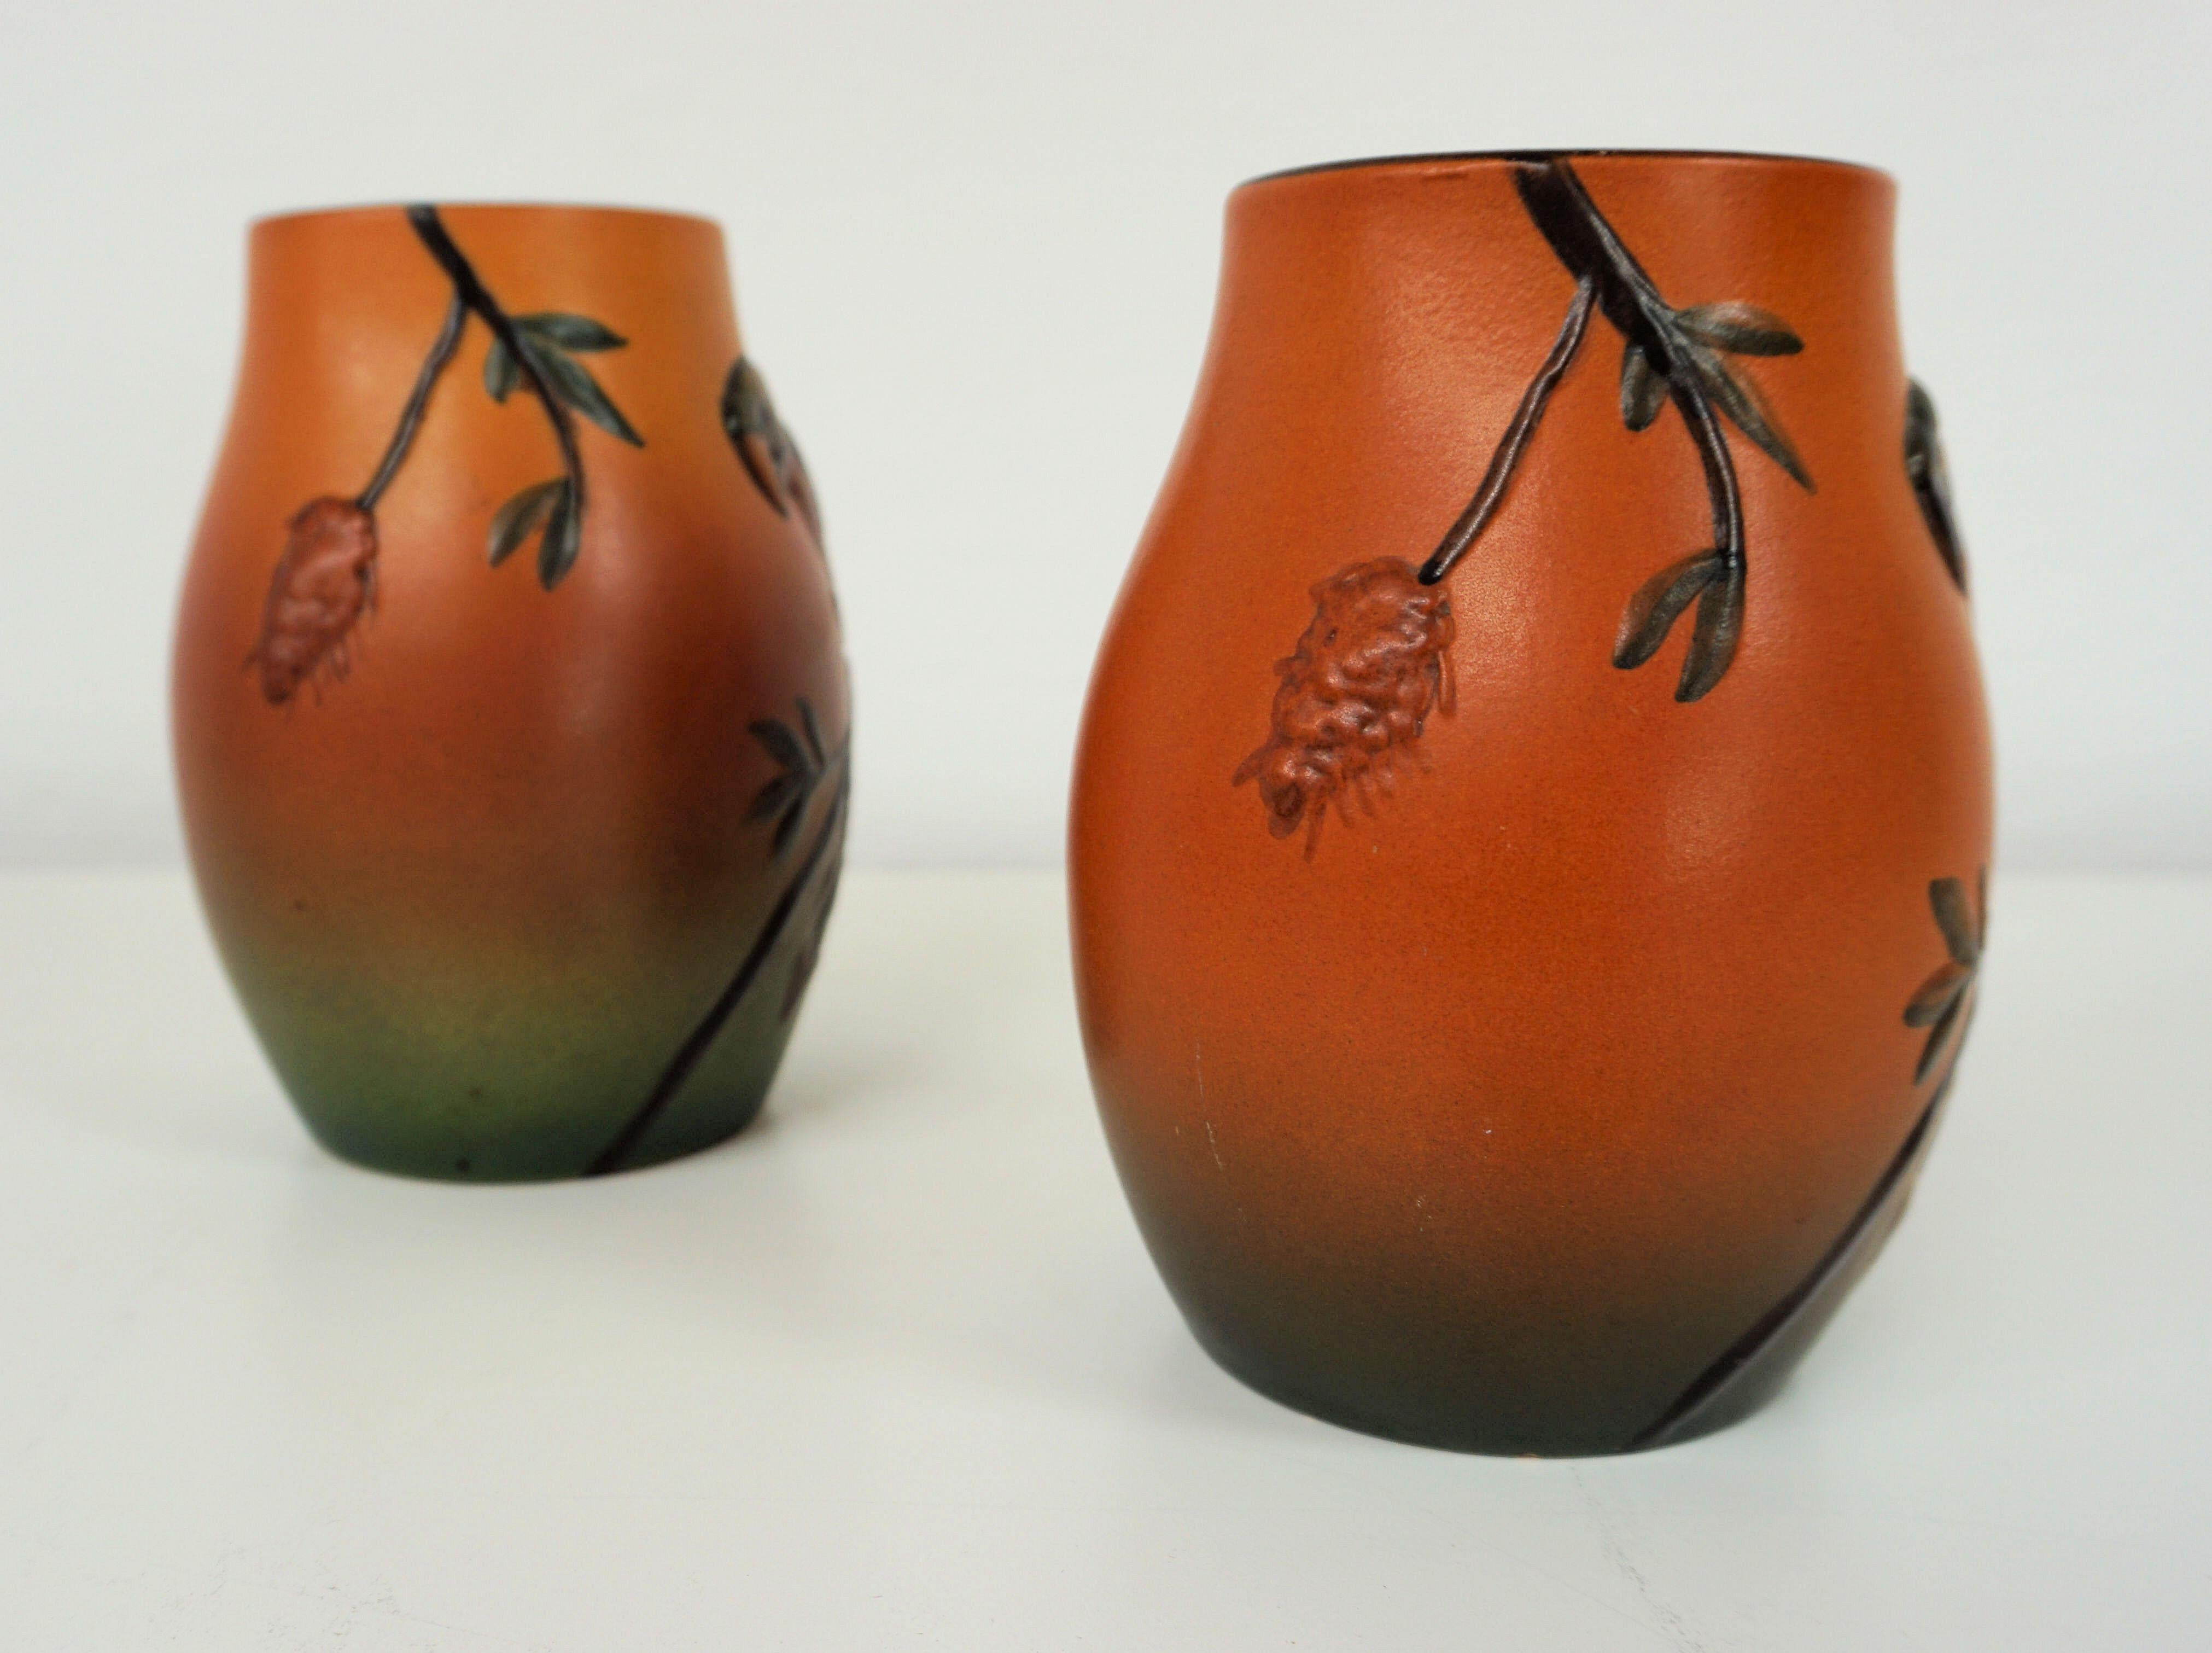 Ceramic 1920s Handcrafted Danish Art Nouveau Parrot Decorated Vases by P. Ipsens Enke